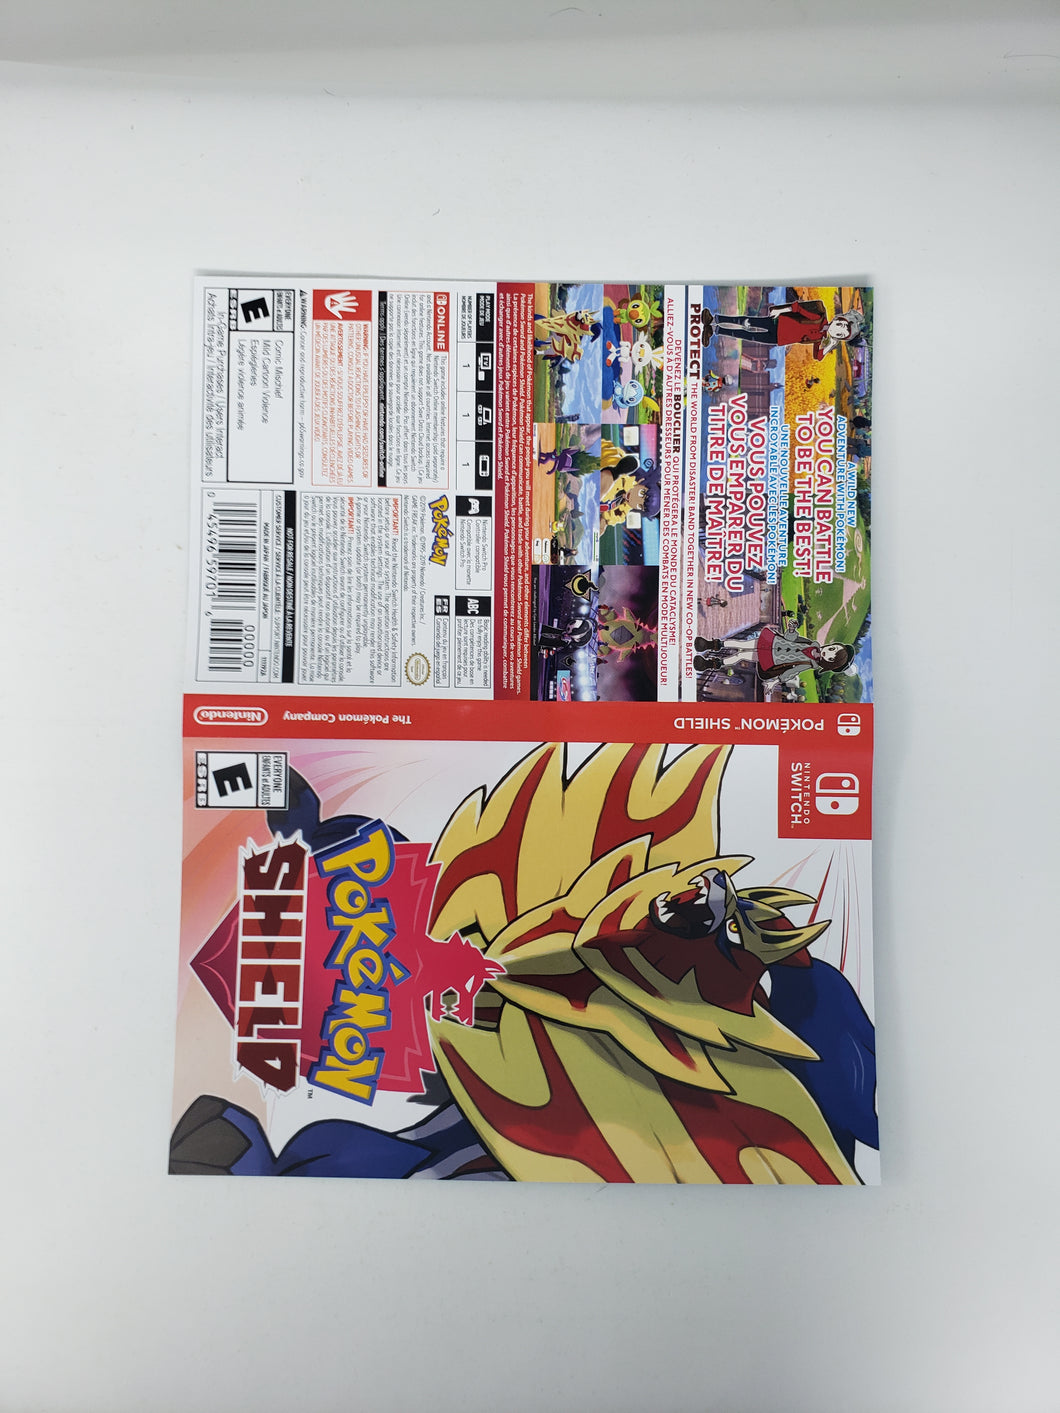 Pokemon Shield [Cover Art] - Nintendo Switch